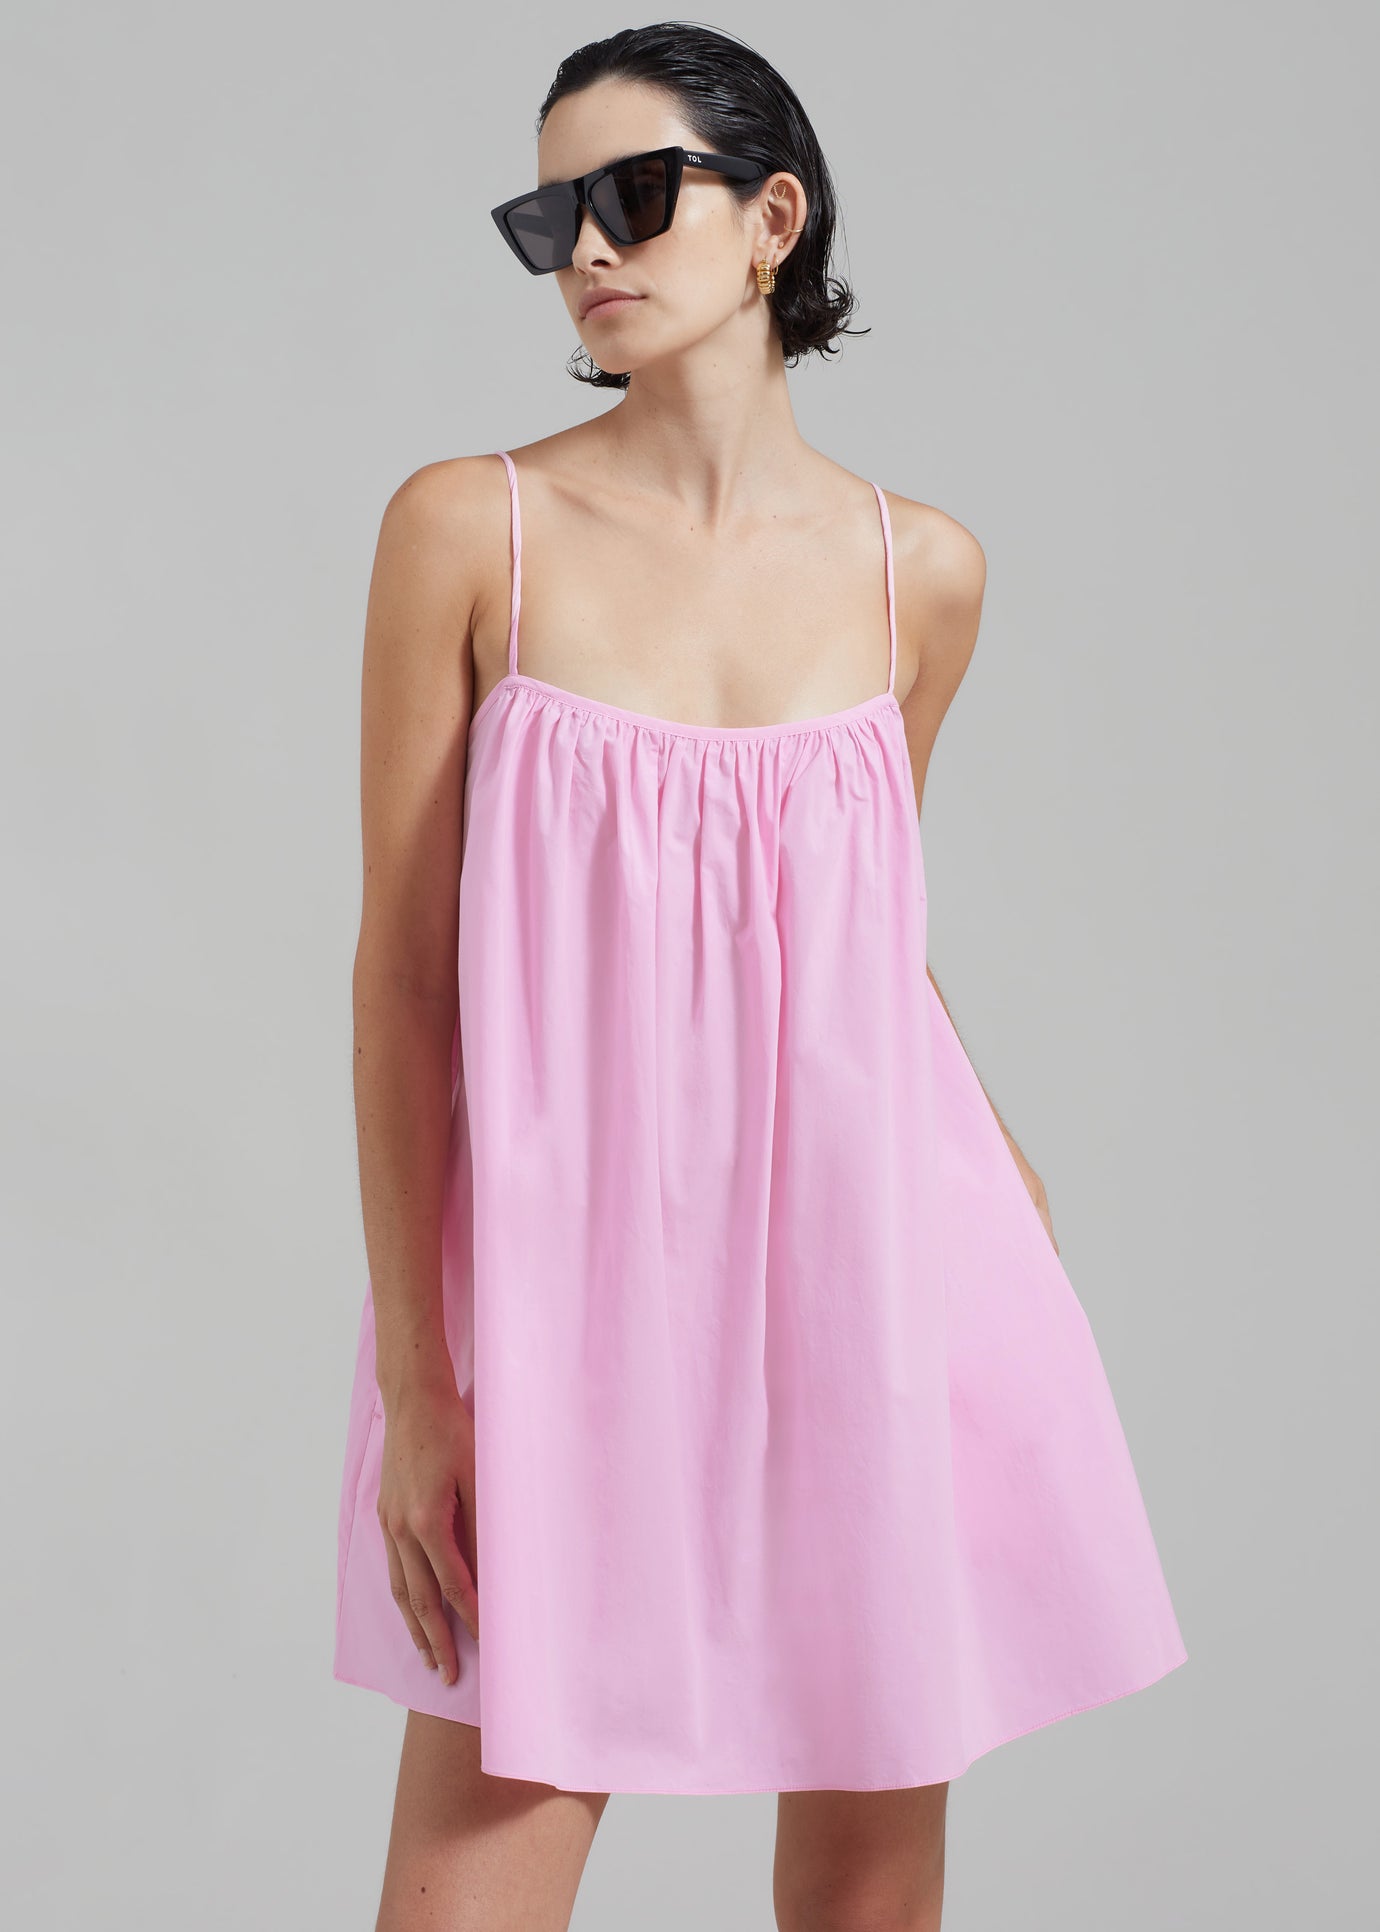 Matteau Voluminous Cami Mini Dress - Rosewater